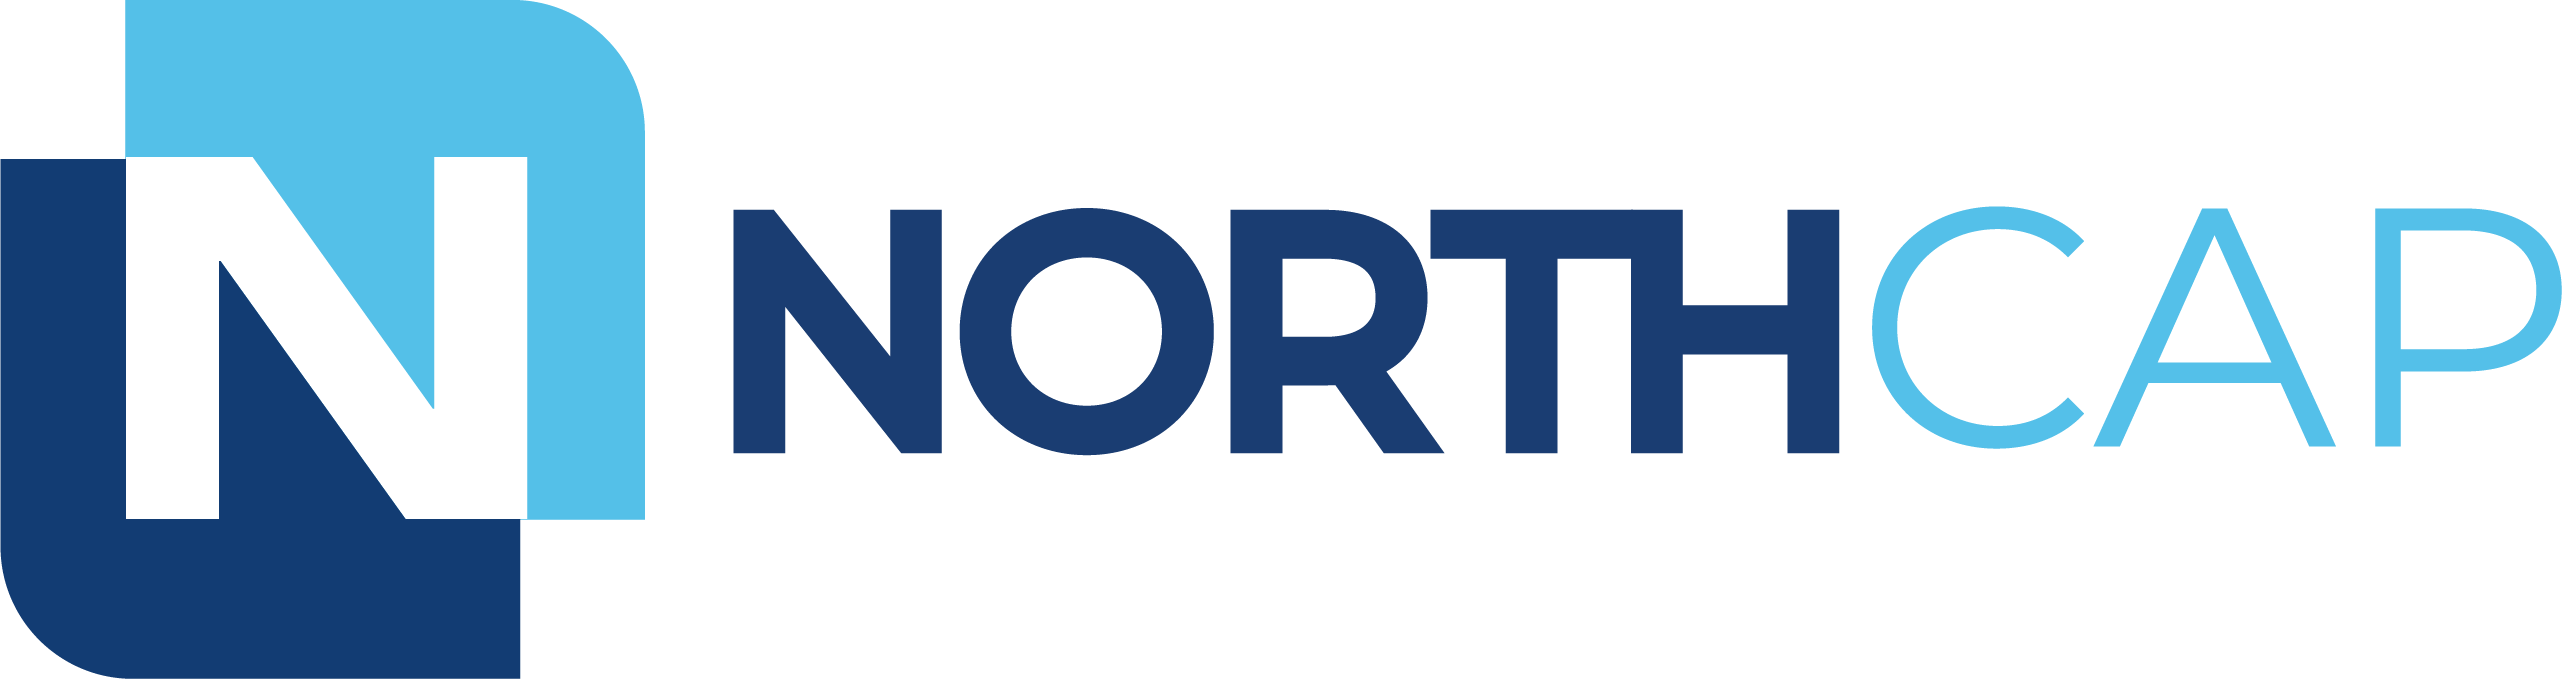 NorthCap logo